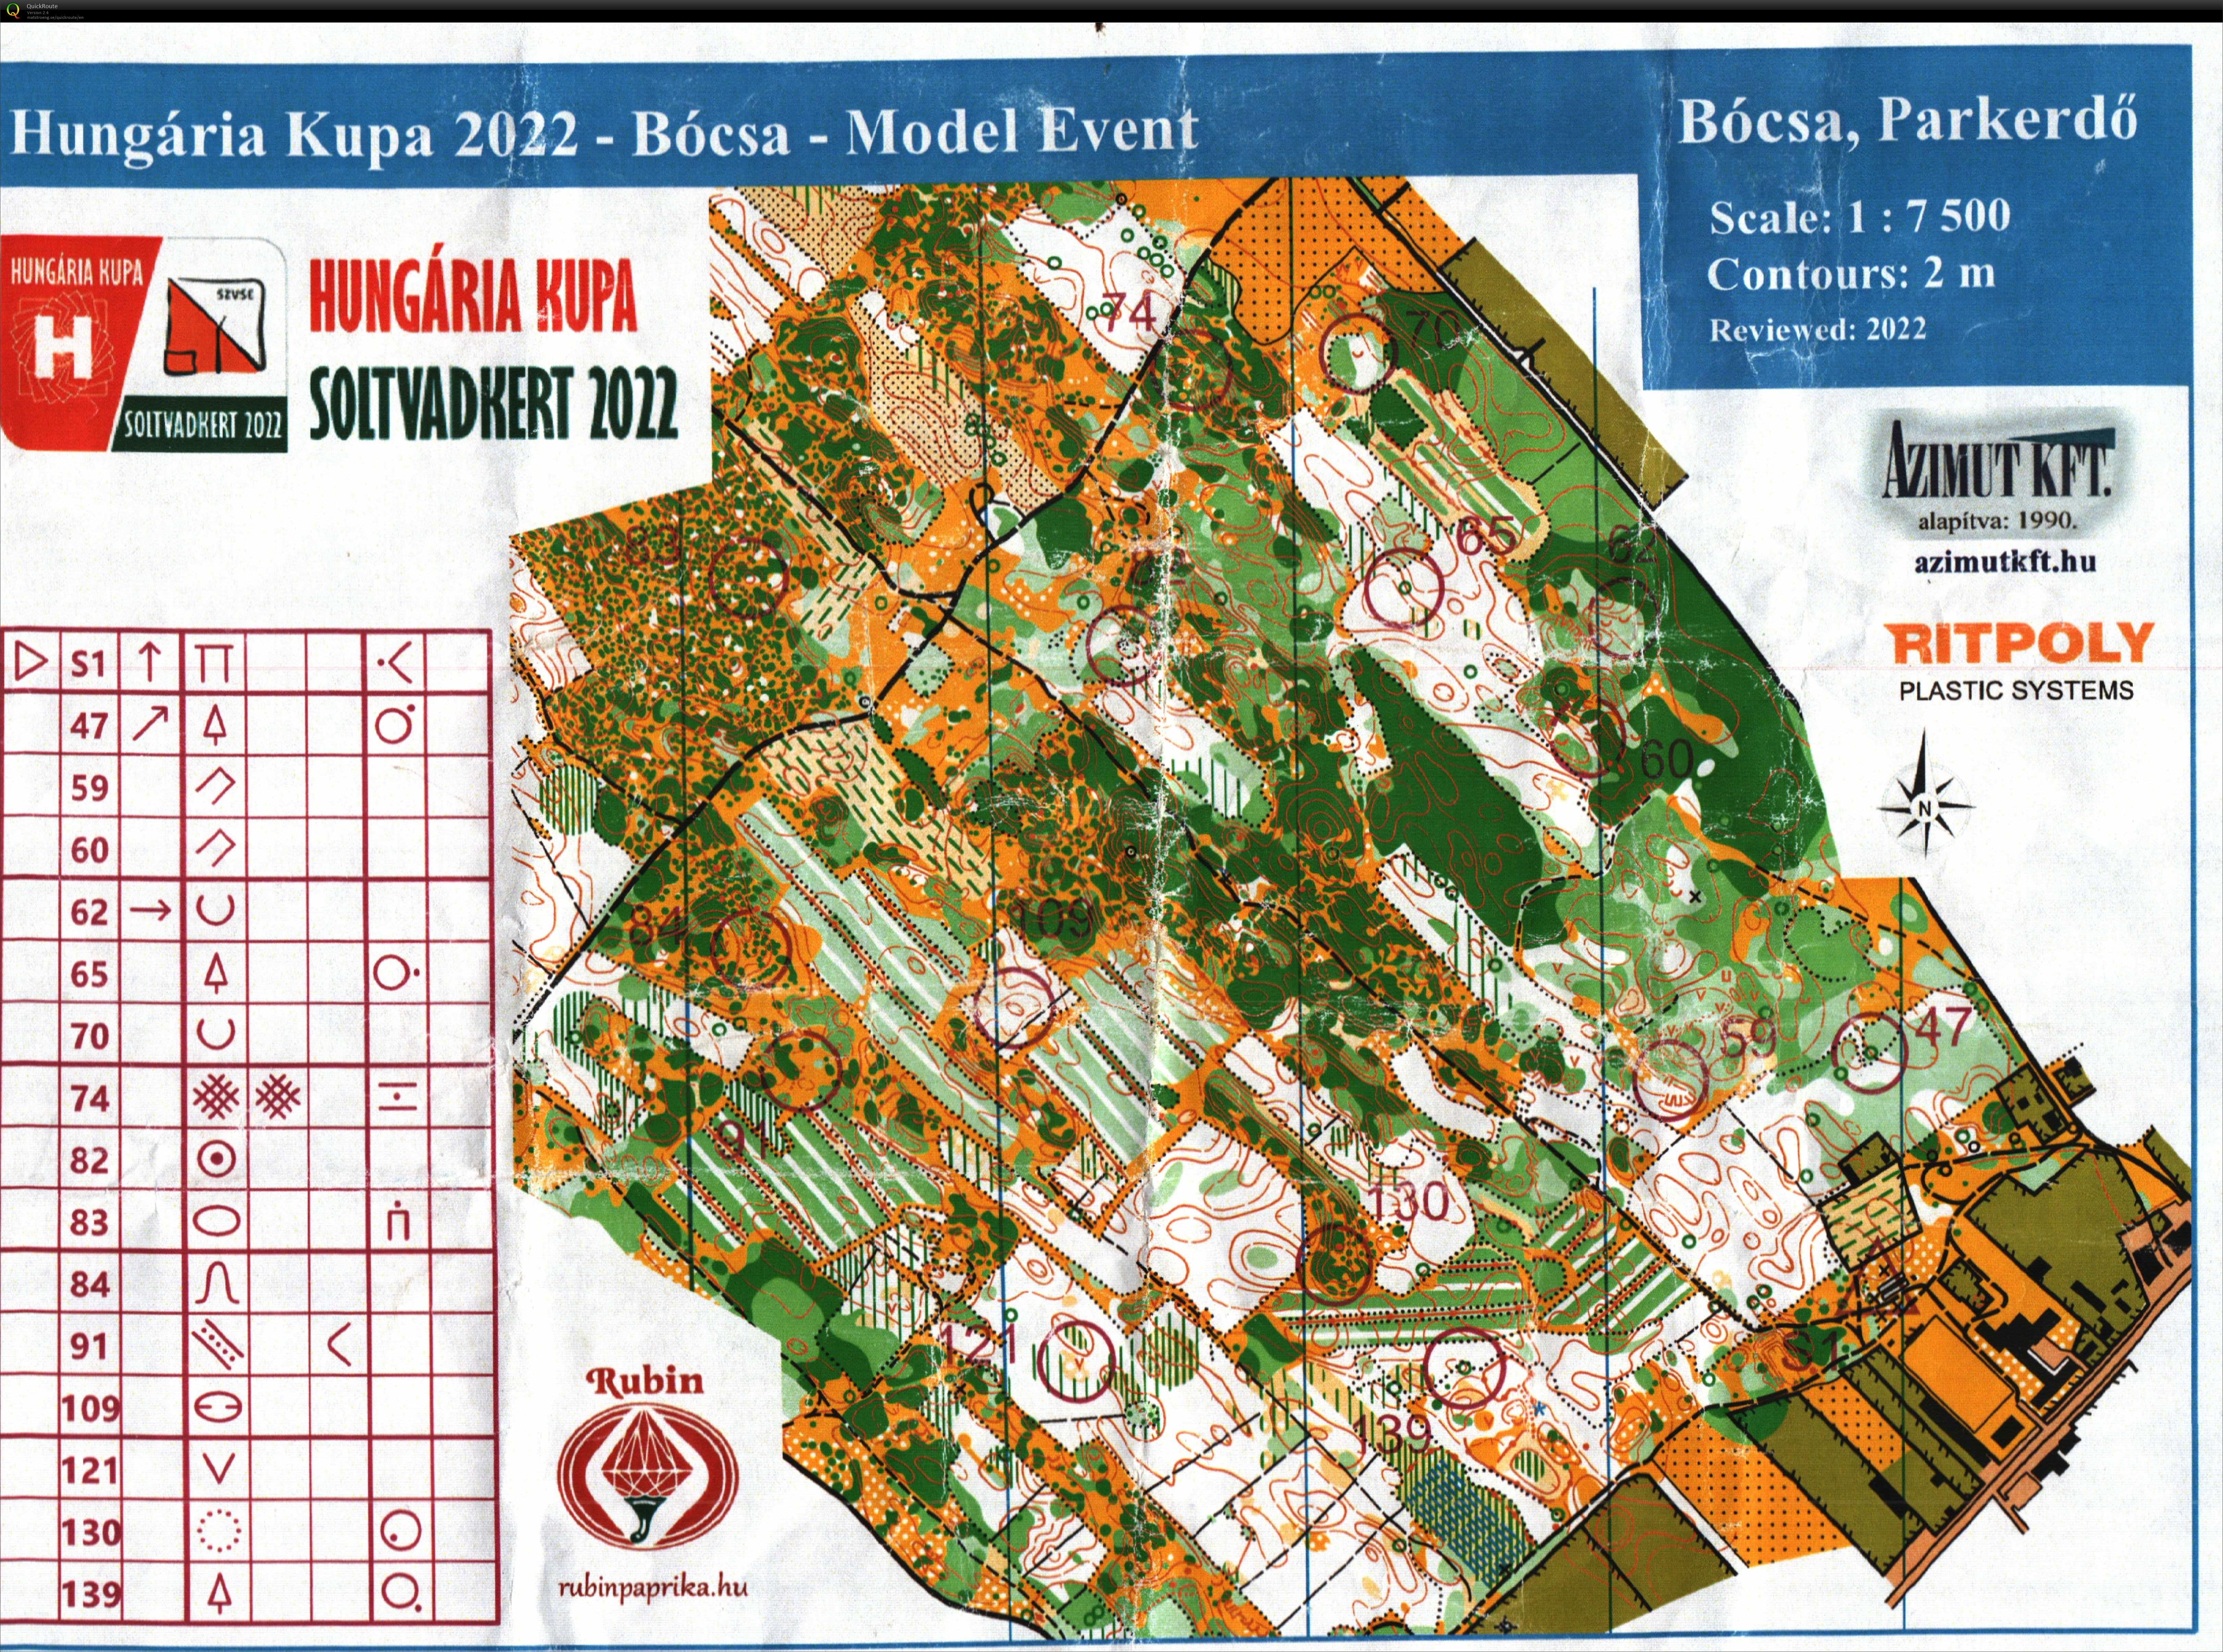 Hungaria Kupa Model Event (2022-08-09)